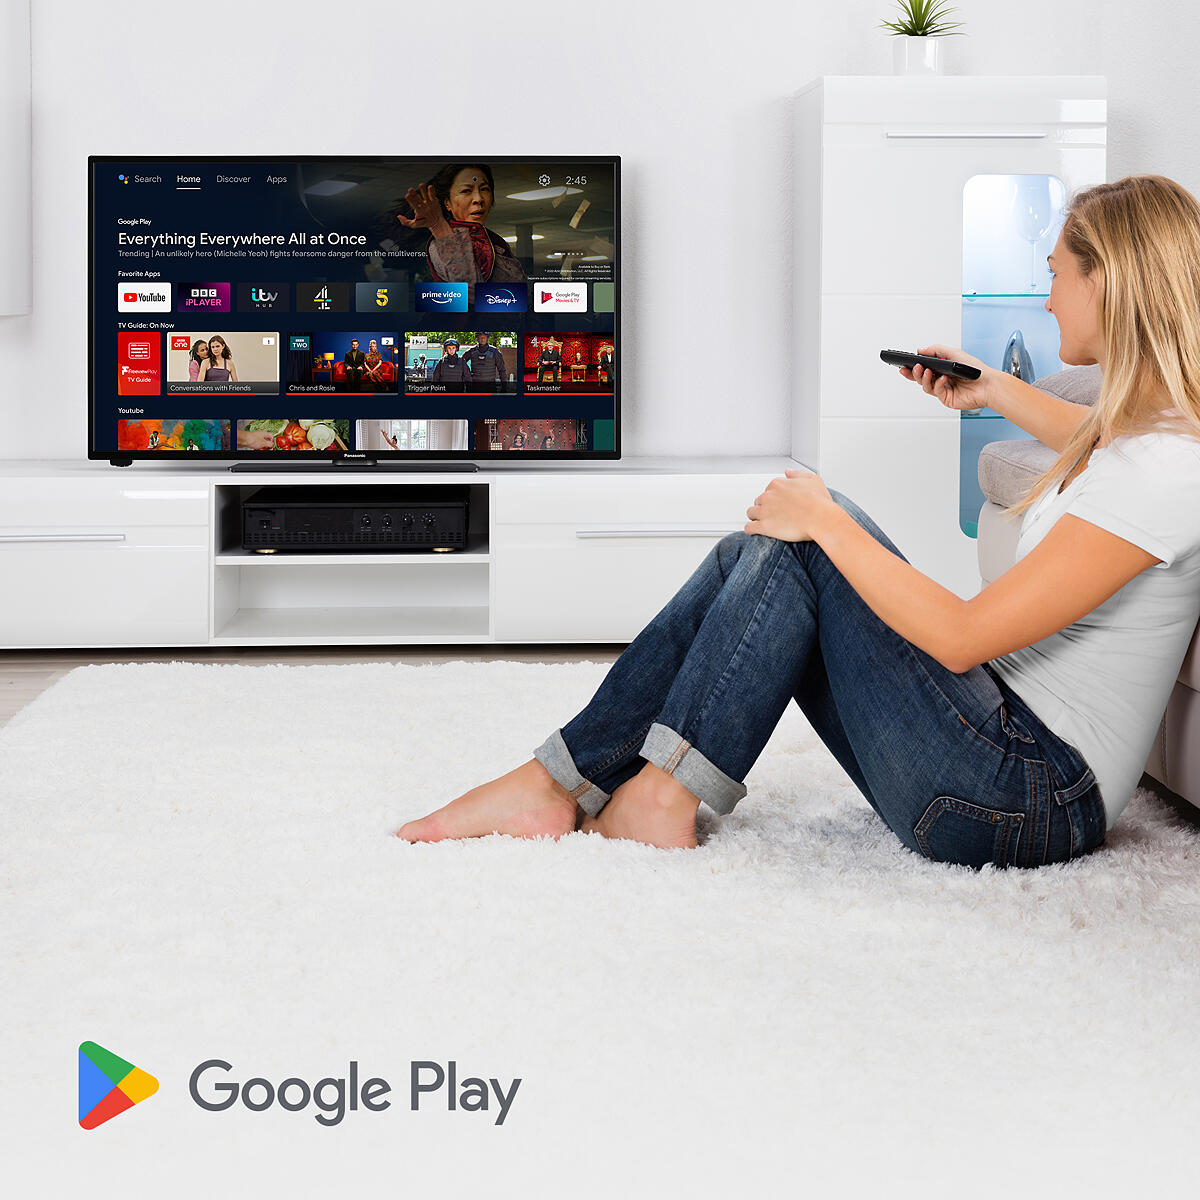 Panasonic TV Remote 2 – Apps no Google Play